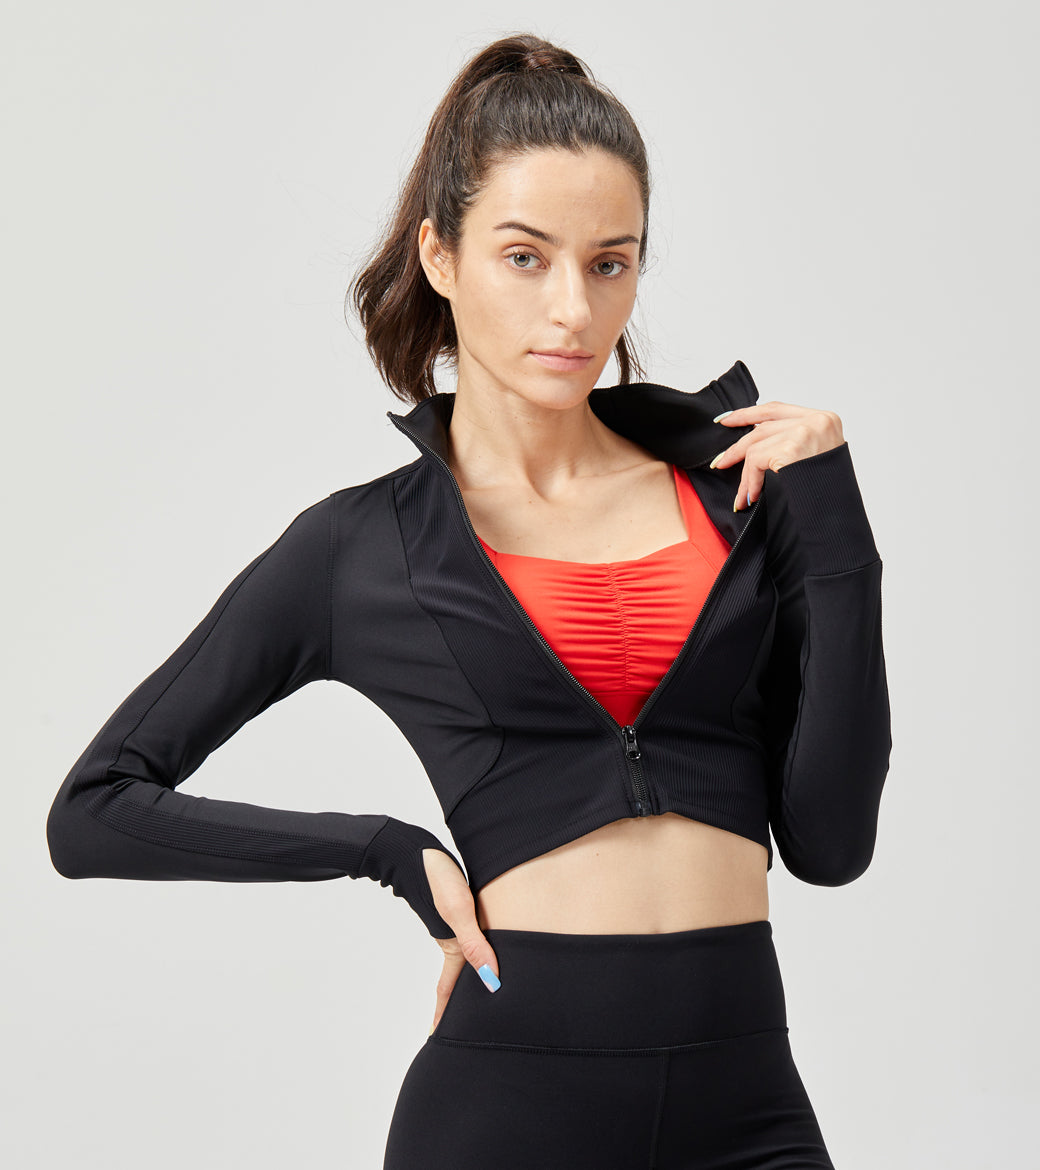 LOVESOFT Women's Heated Wire Black Fitness Gym Jacket